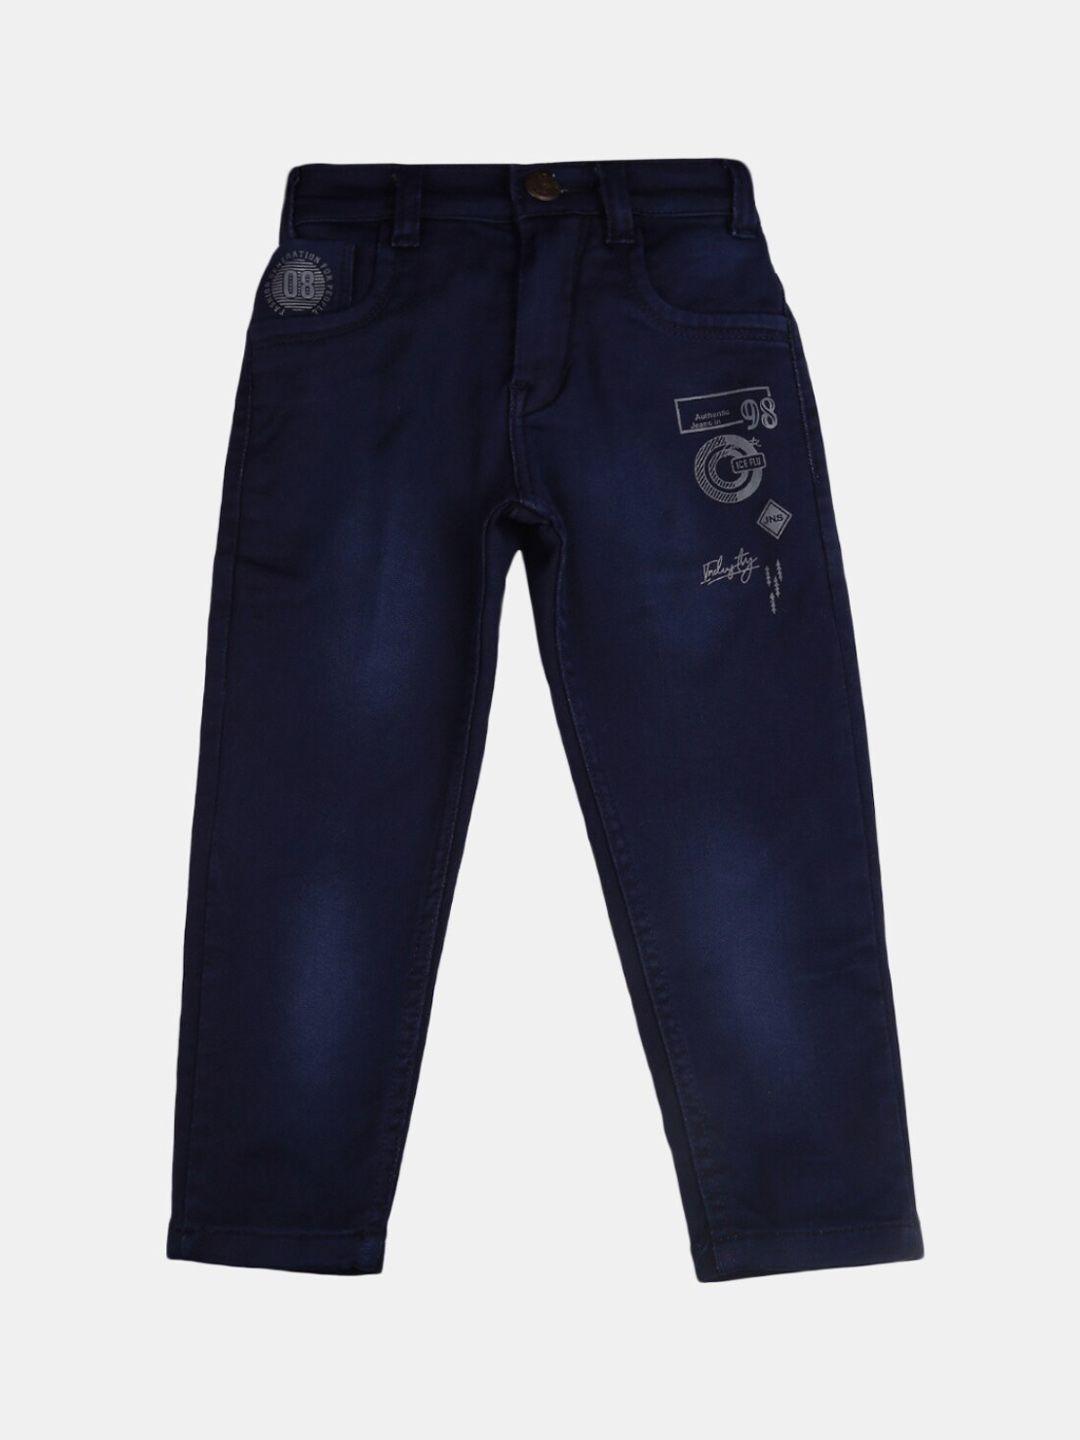 v-mart boys navy blue printed easy wash trousers